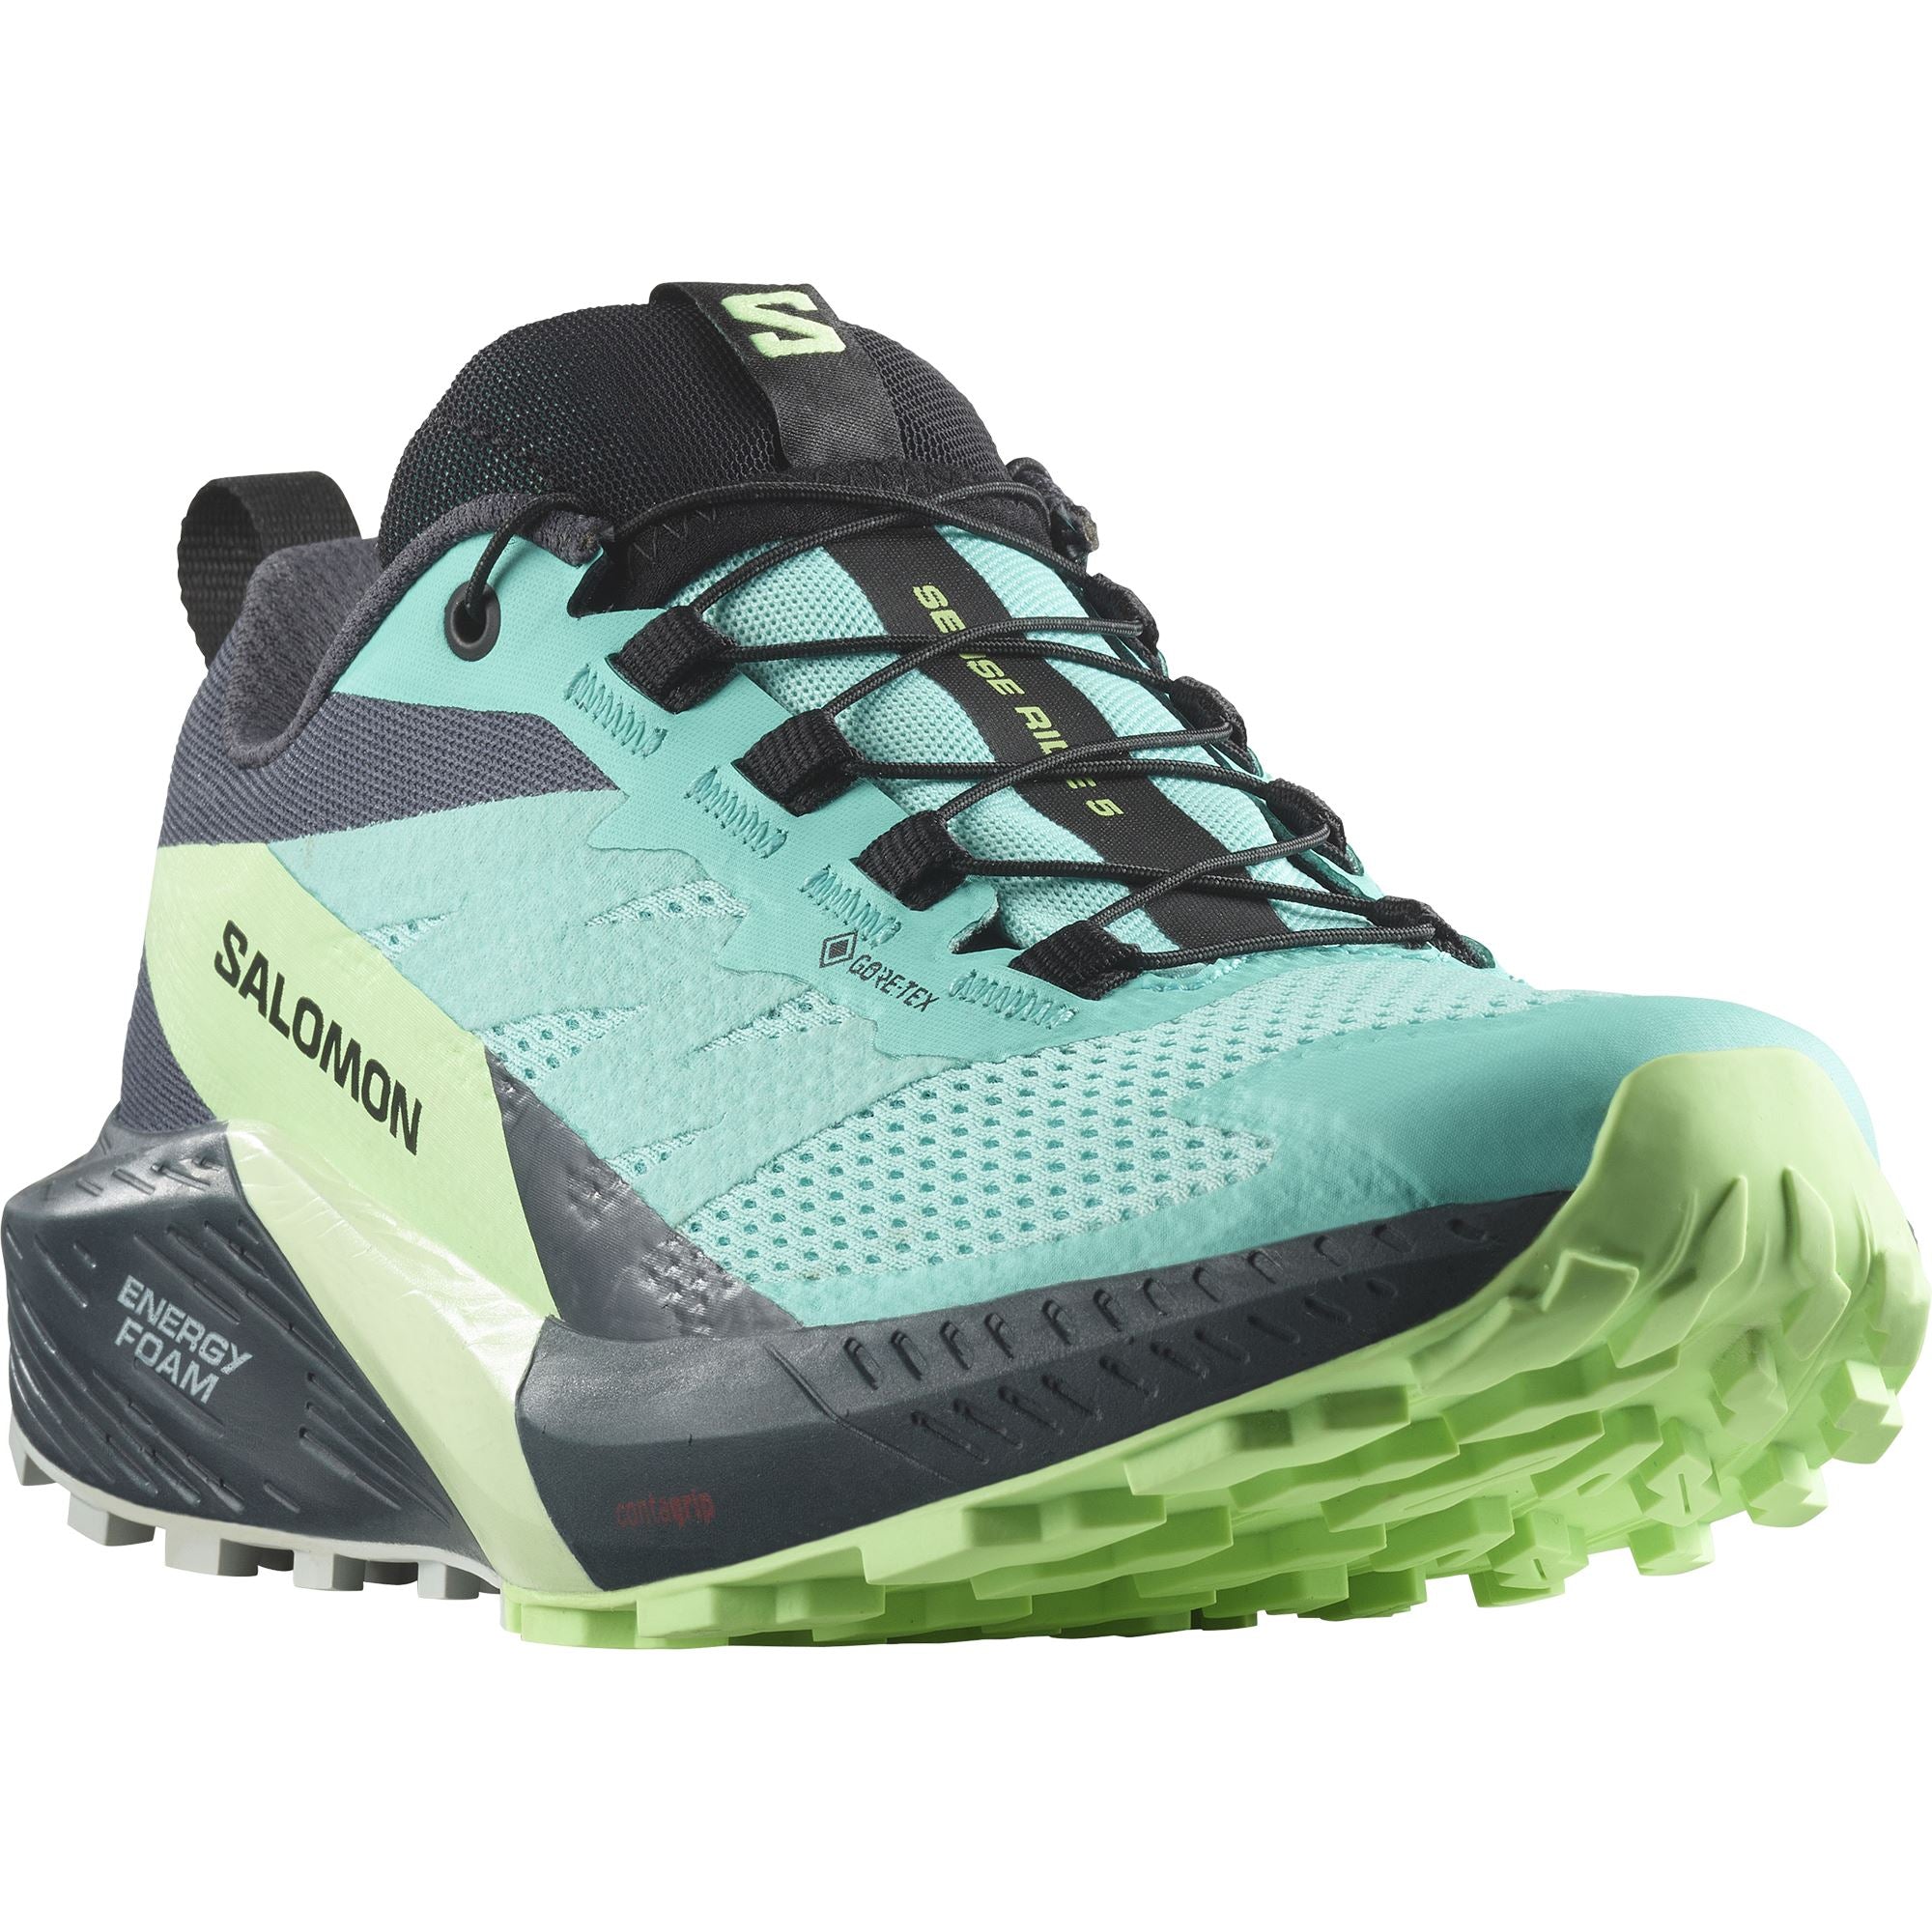 Salomon Sense Ride 5 GTX Women's Trail Running Shoes 